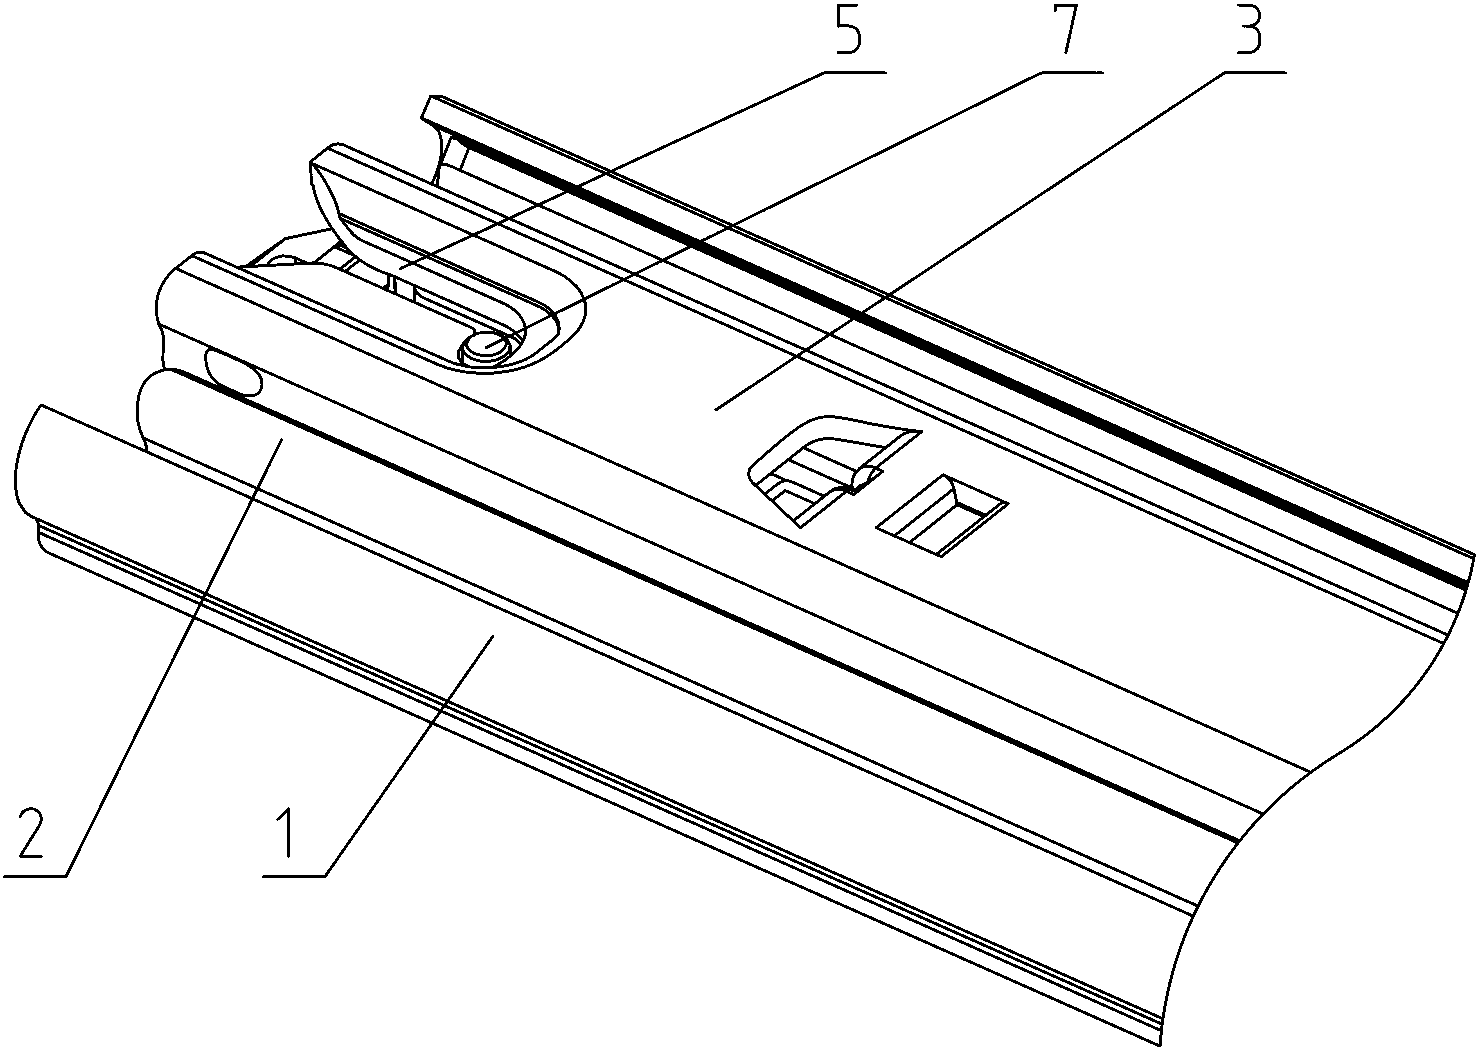 Interlocked three-section sliding rail